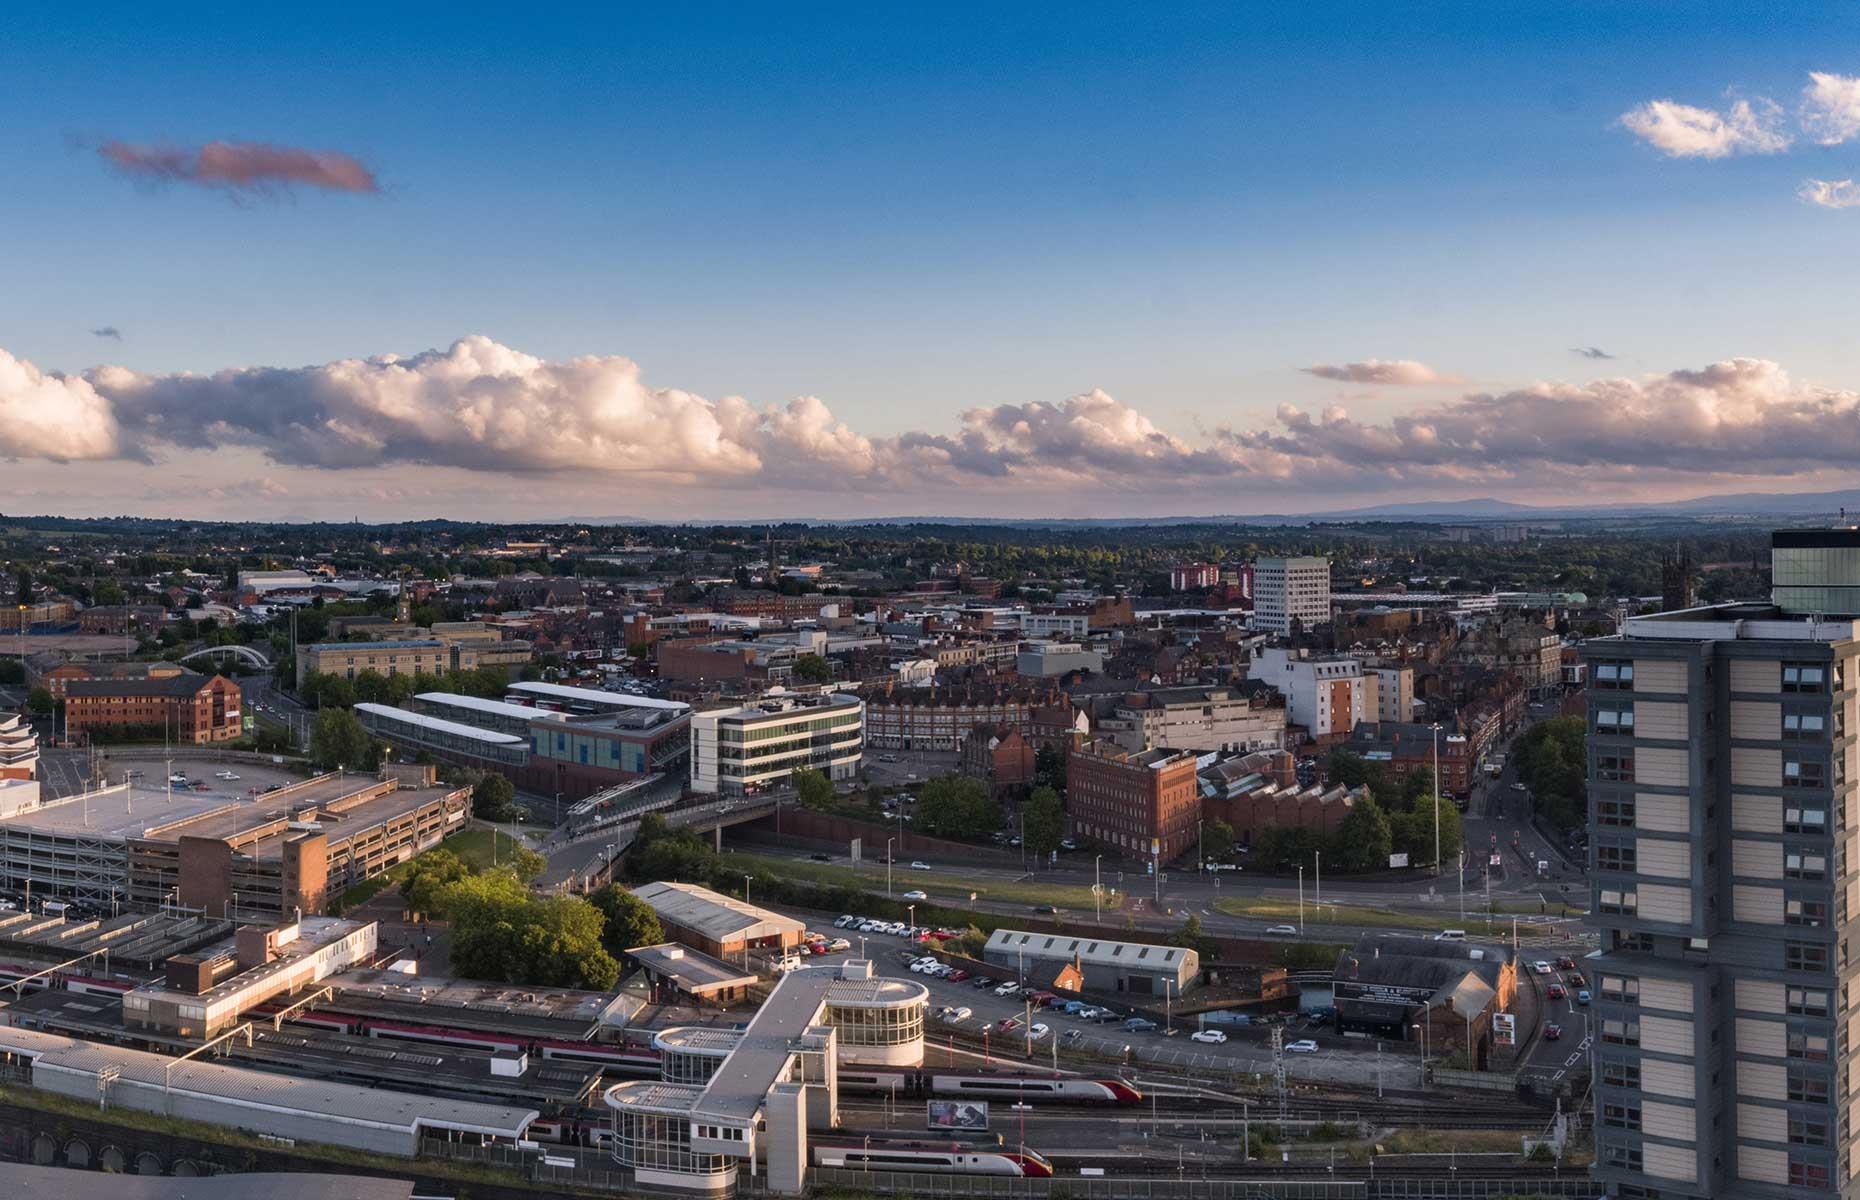 Panoramic view across Wolverhampton